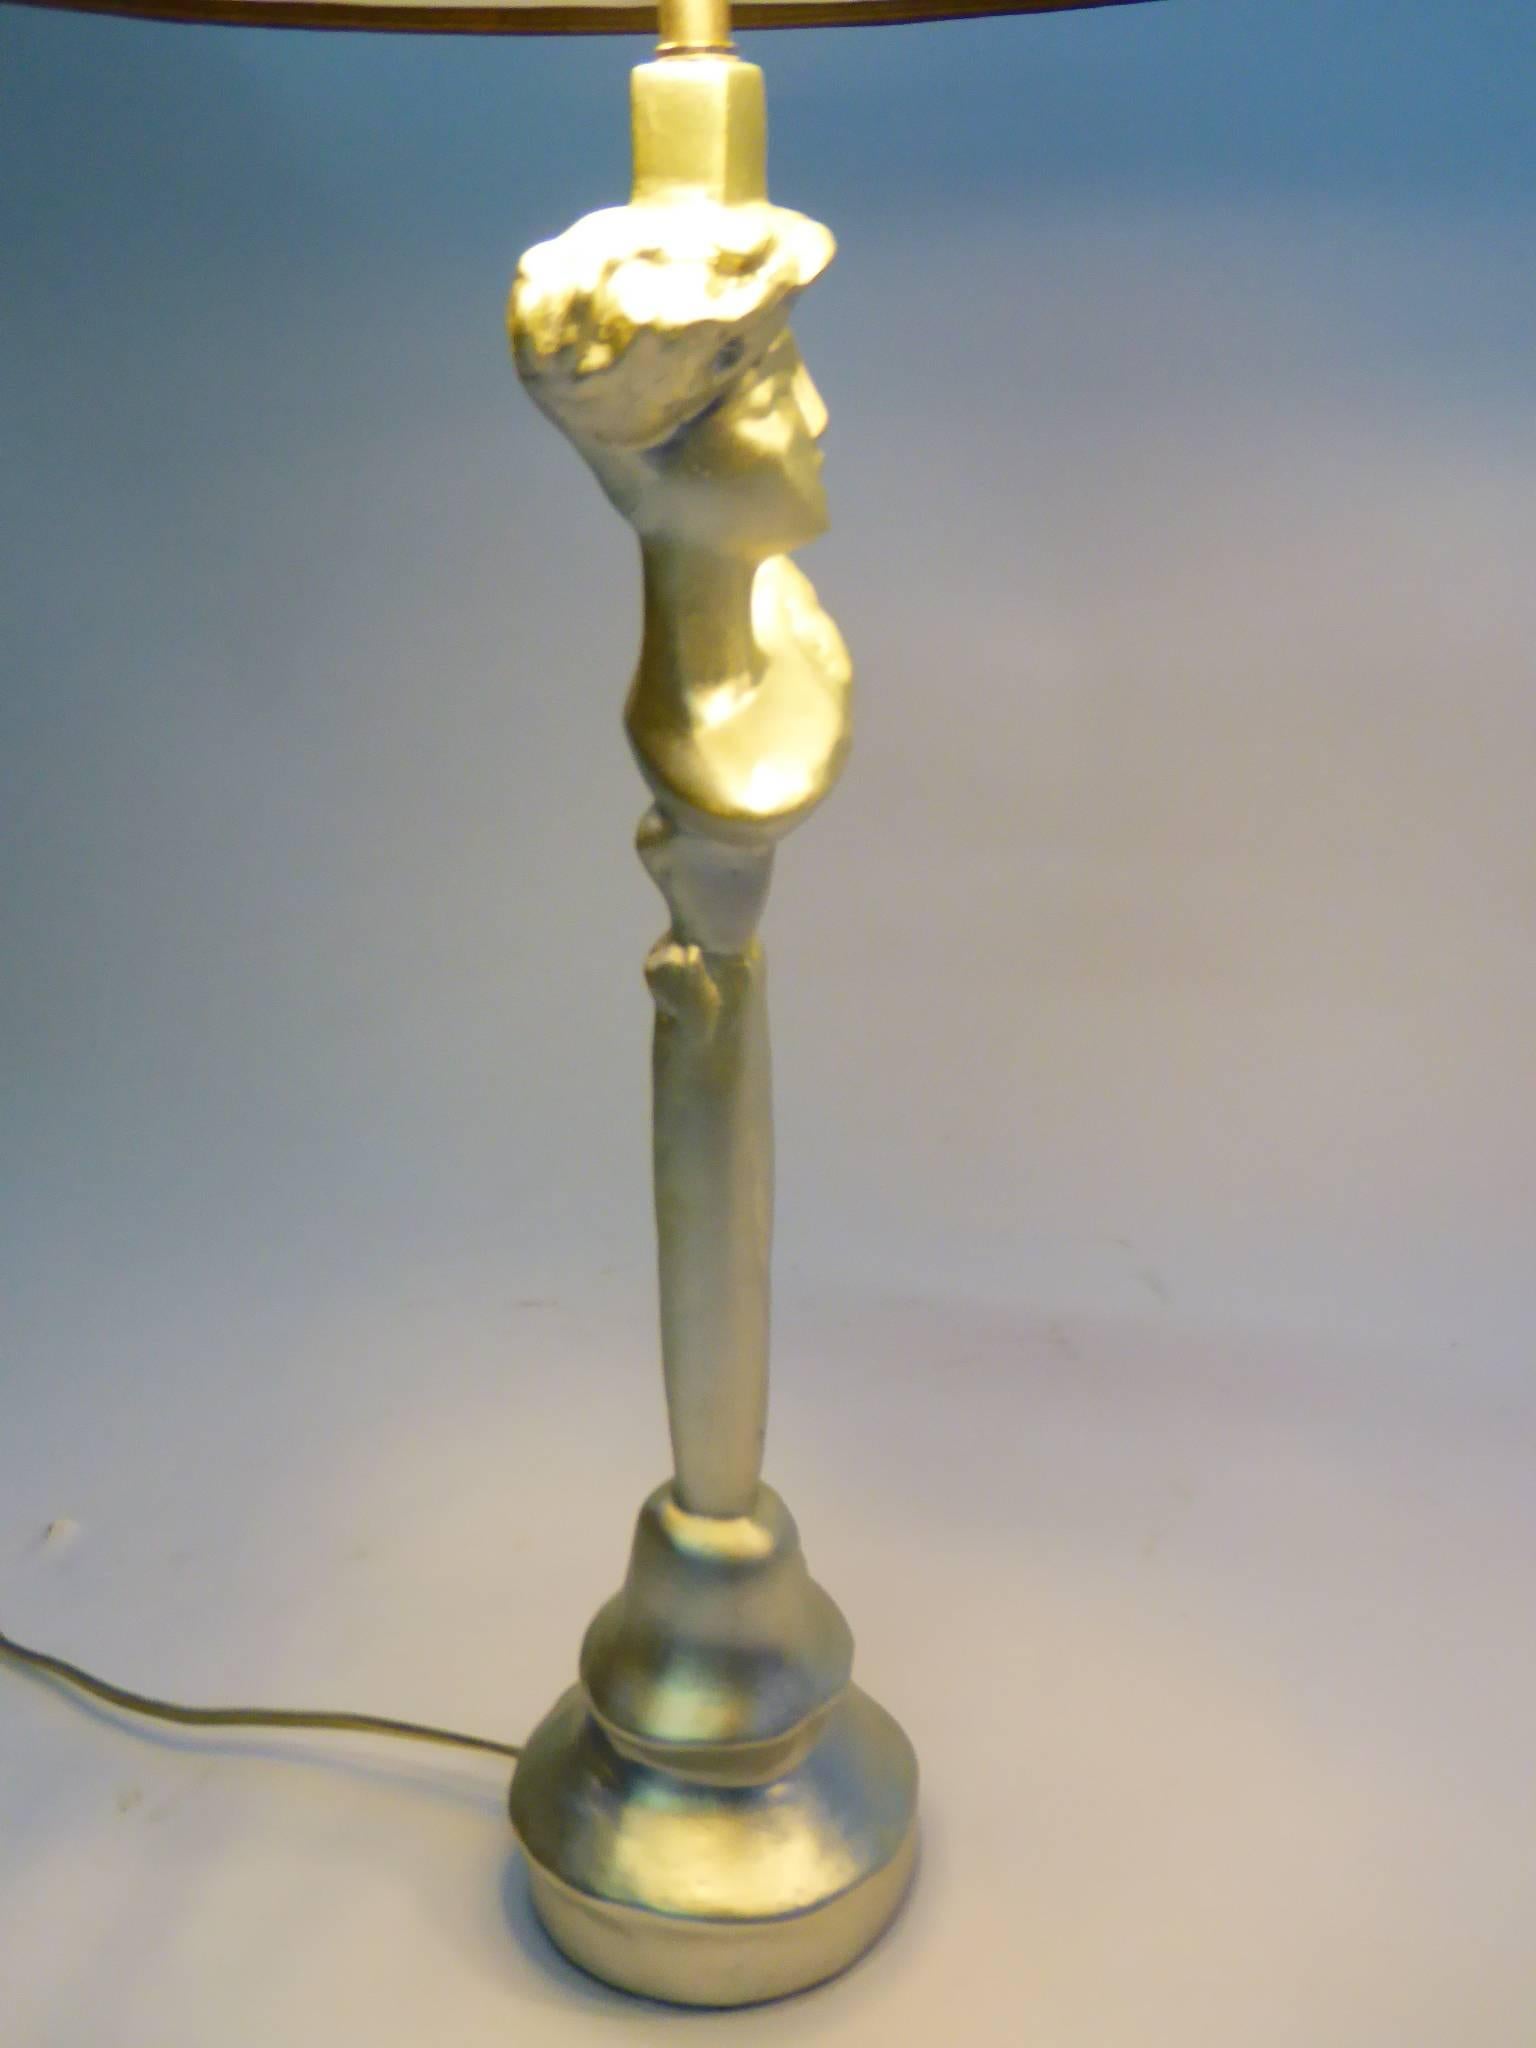 Gilt Sirmos Masque Table Lamps Giacometti Design